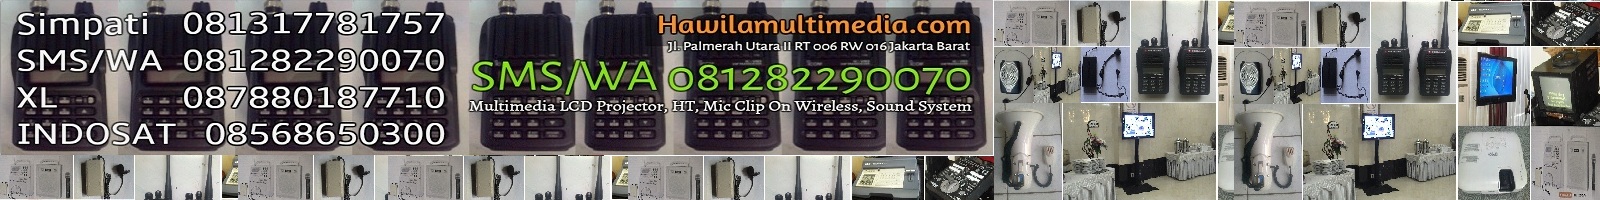 Sewa Mic Wireless Jakarta, Rental Mic Clip ON Slipi Dan Sound System Portable